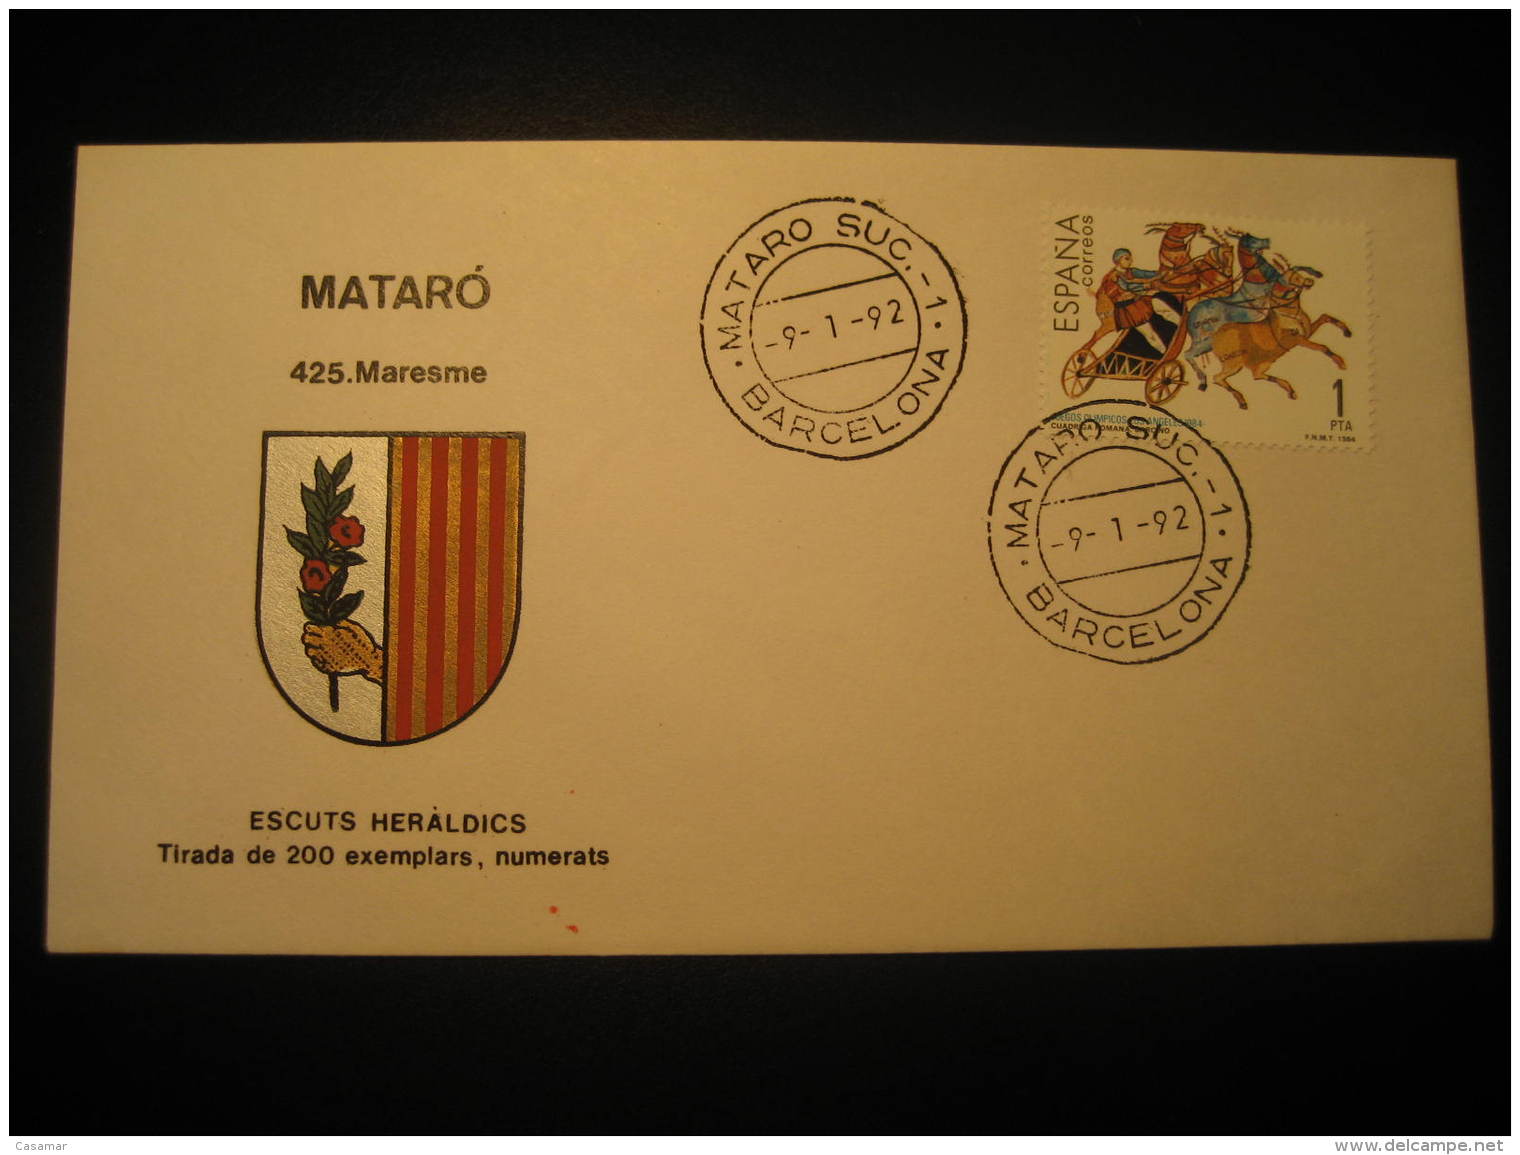 MATARO Maresme Barcelona 1992 Heraldry Heraldic Coat Of Arms Cancel Cover Catalunya - Cartas & Documentos